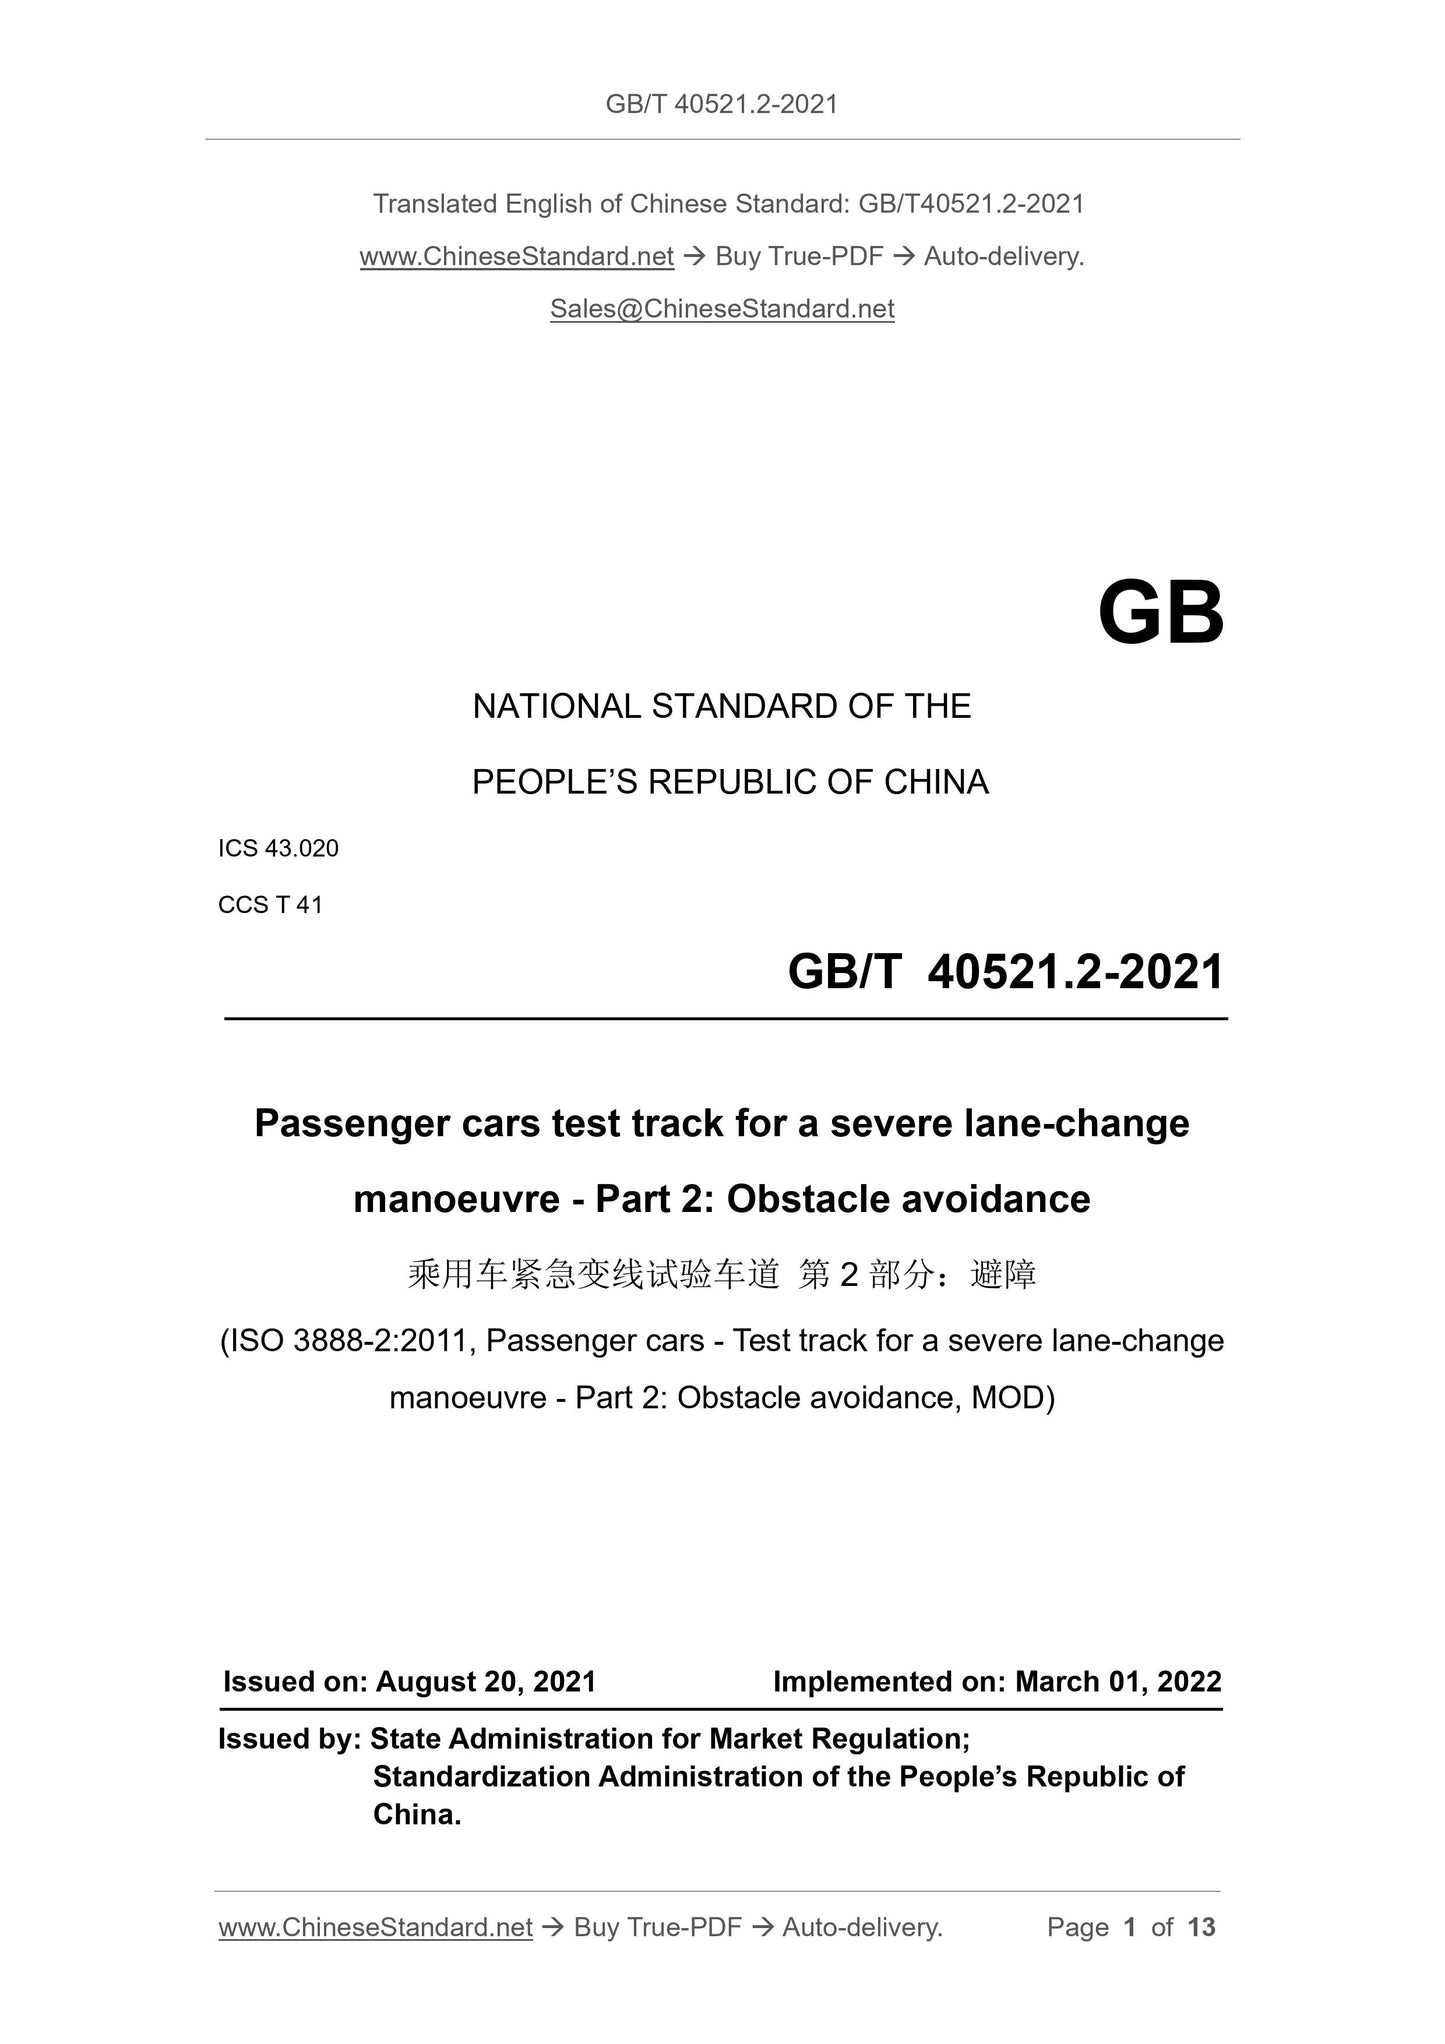 GBT40521.2-2021 Page 1